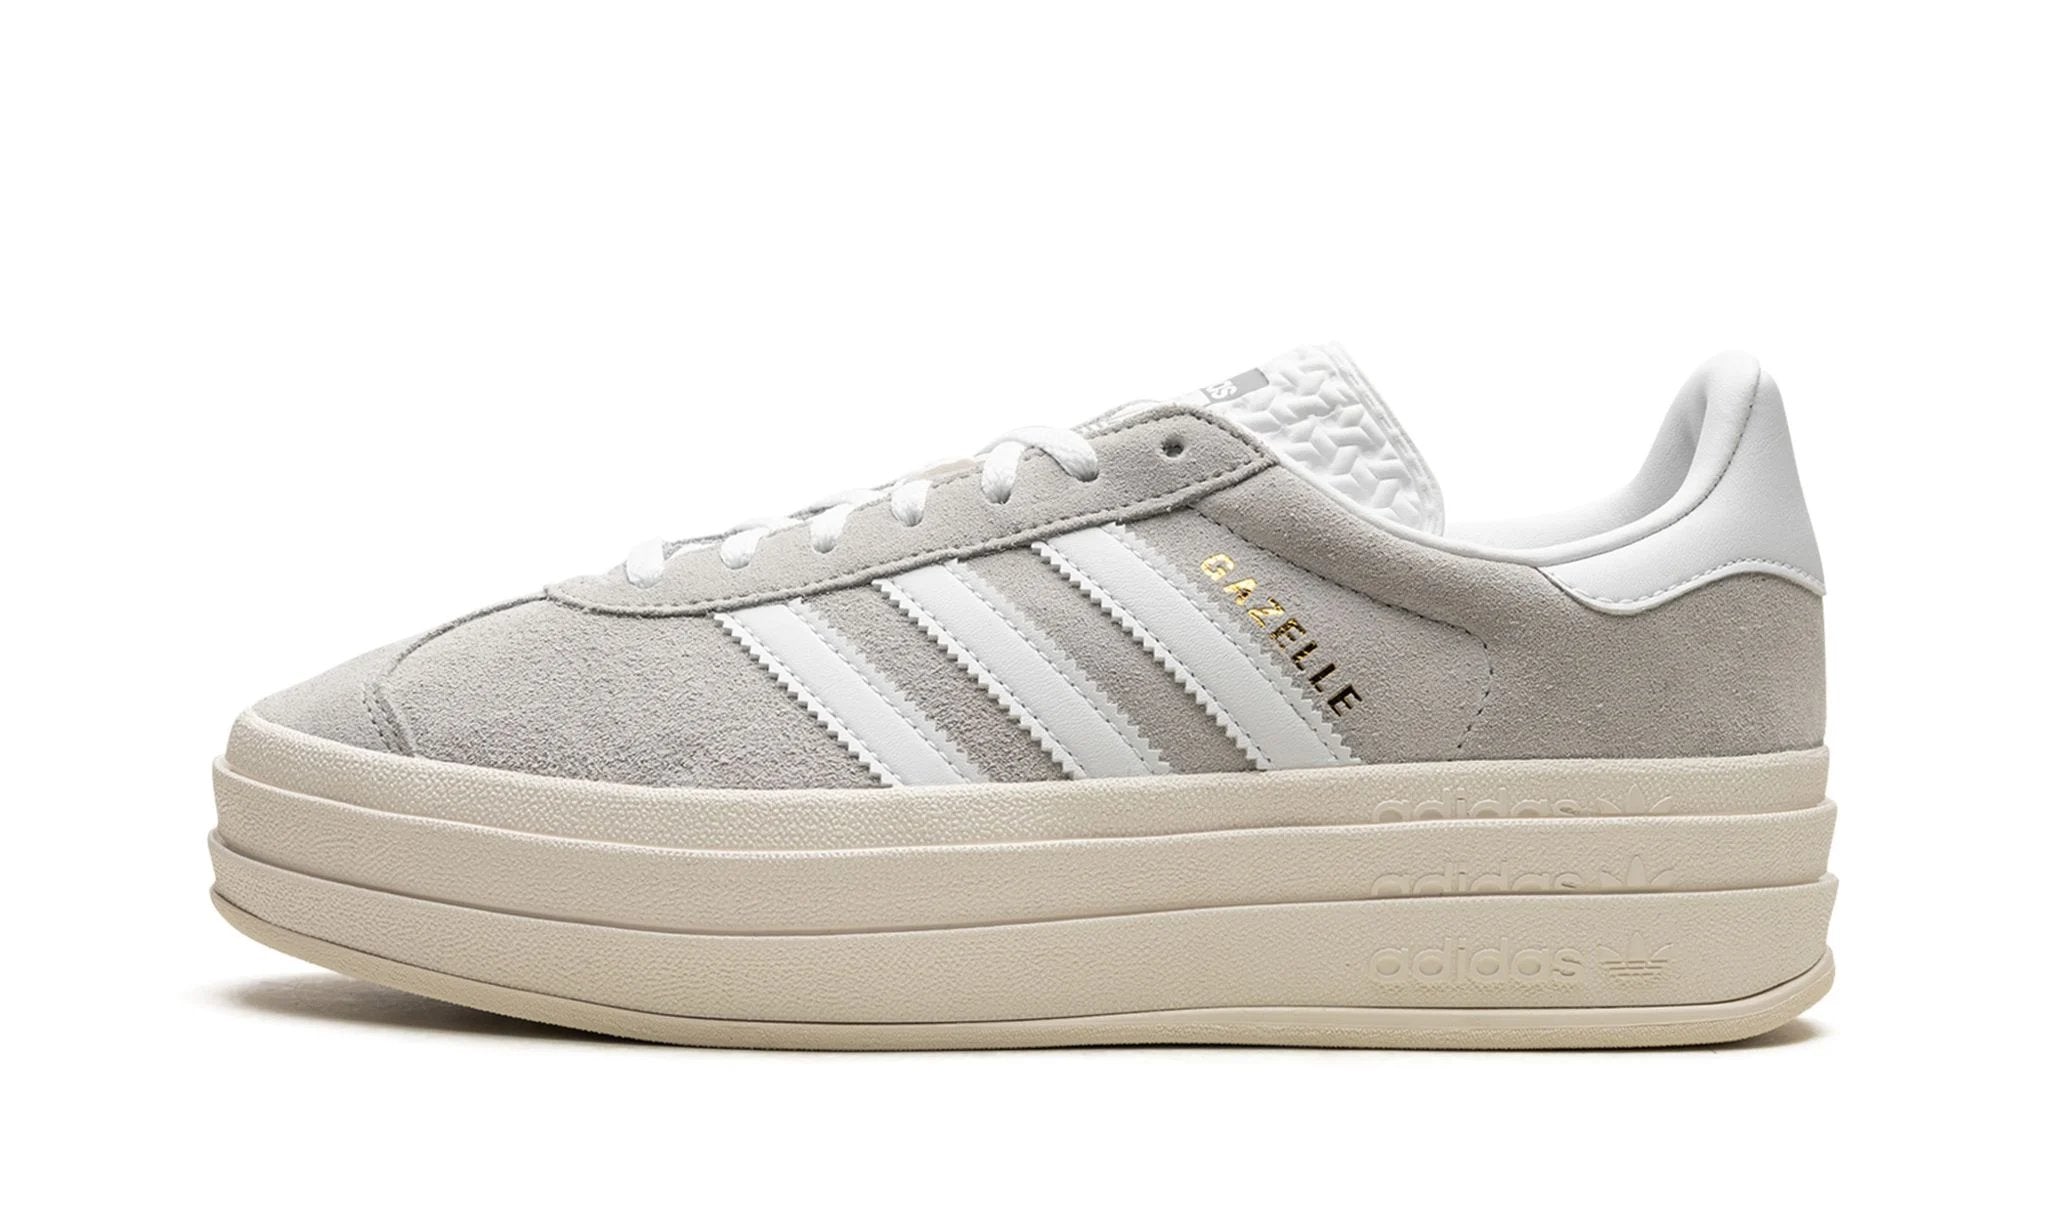 Adidas Gazelle Bold Grey White (Women's) - HQ6893 - Sneakers